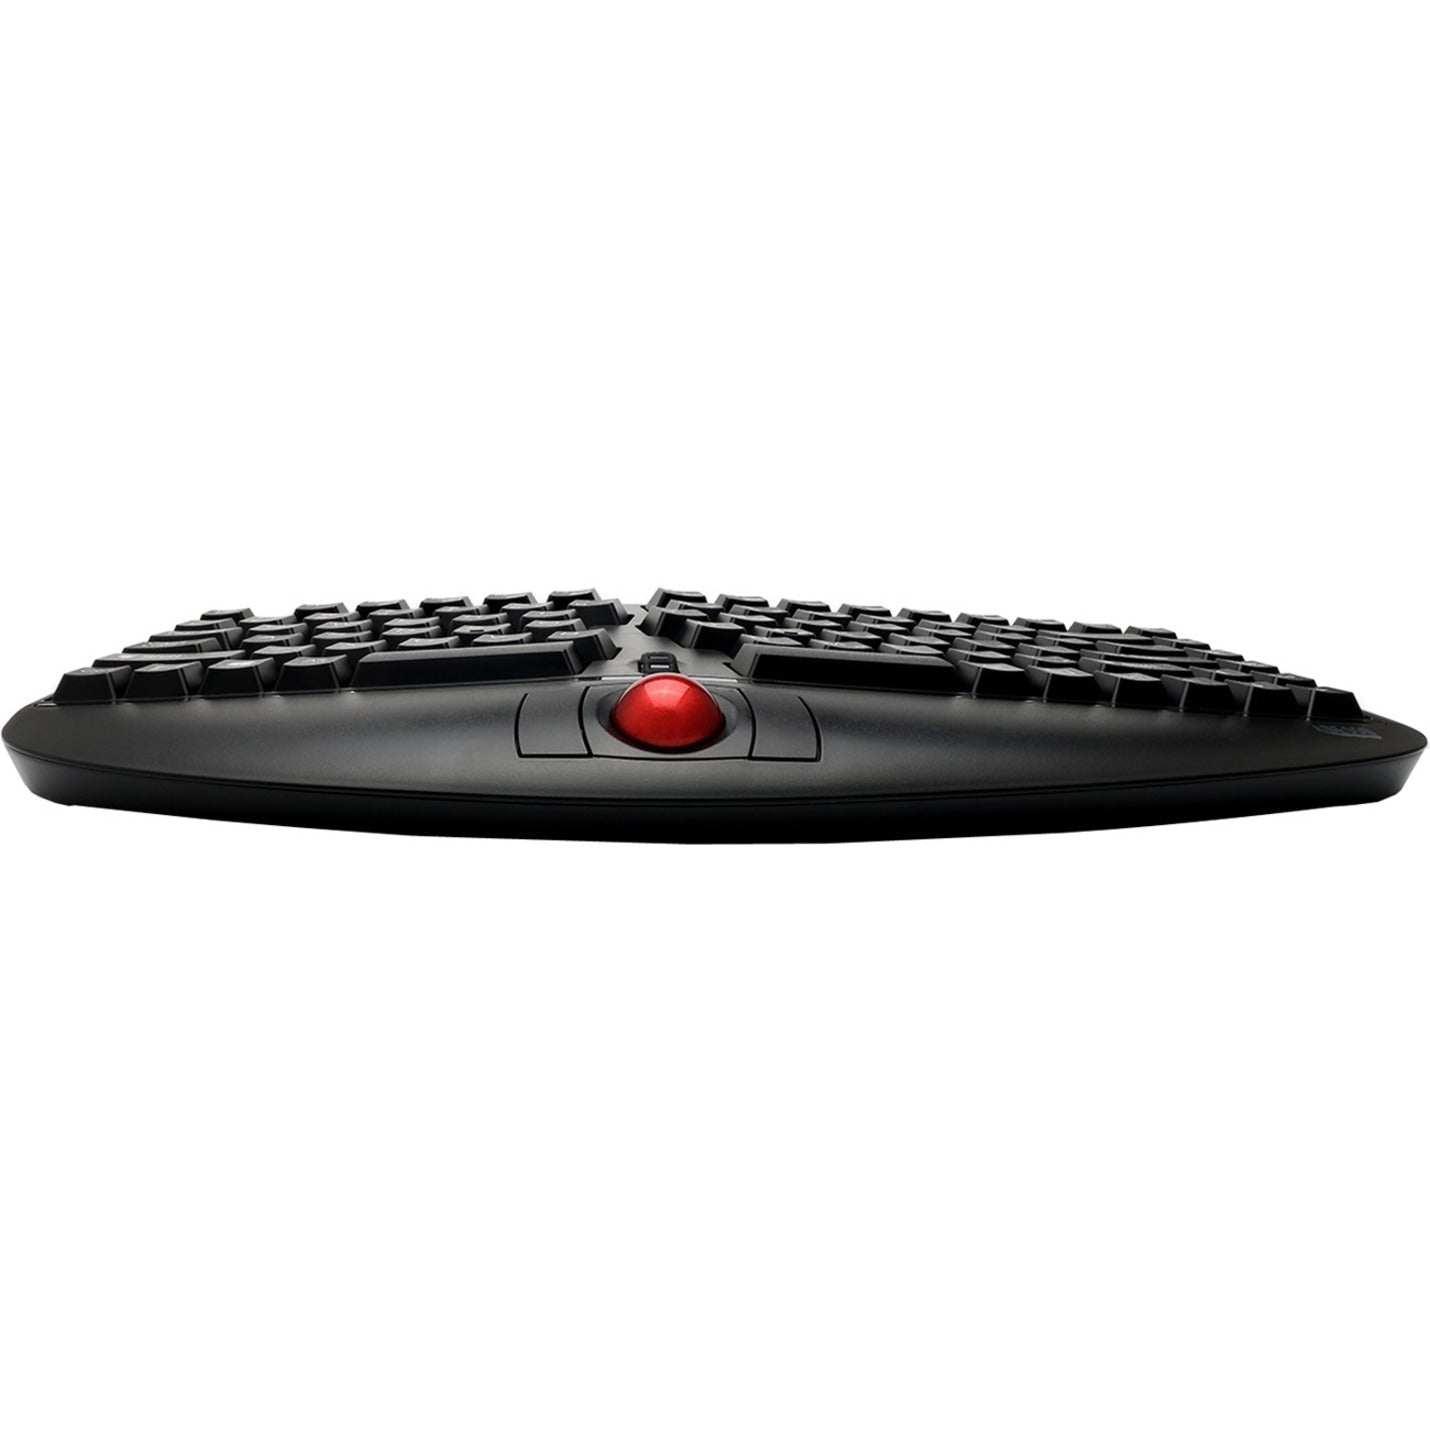 Adesso WKB-3150UB Tru-Form Media 3150 kabellose Ergo Trackball-Tastatur